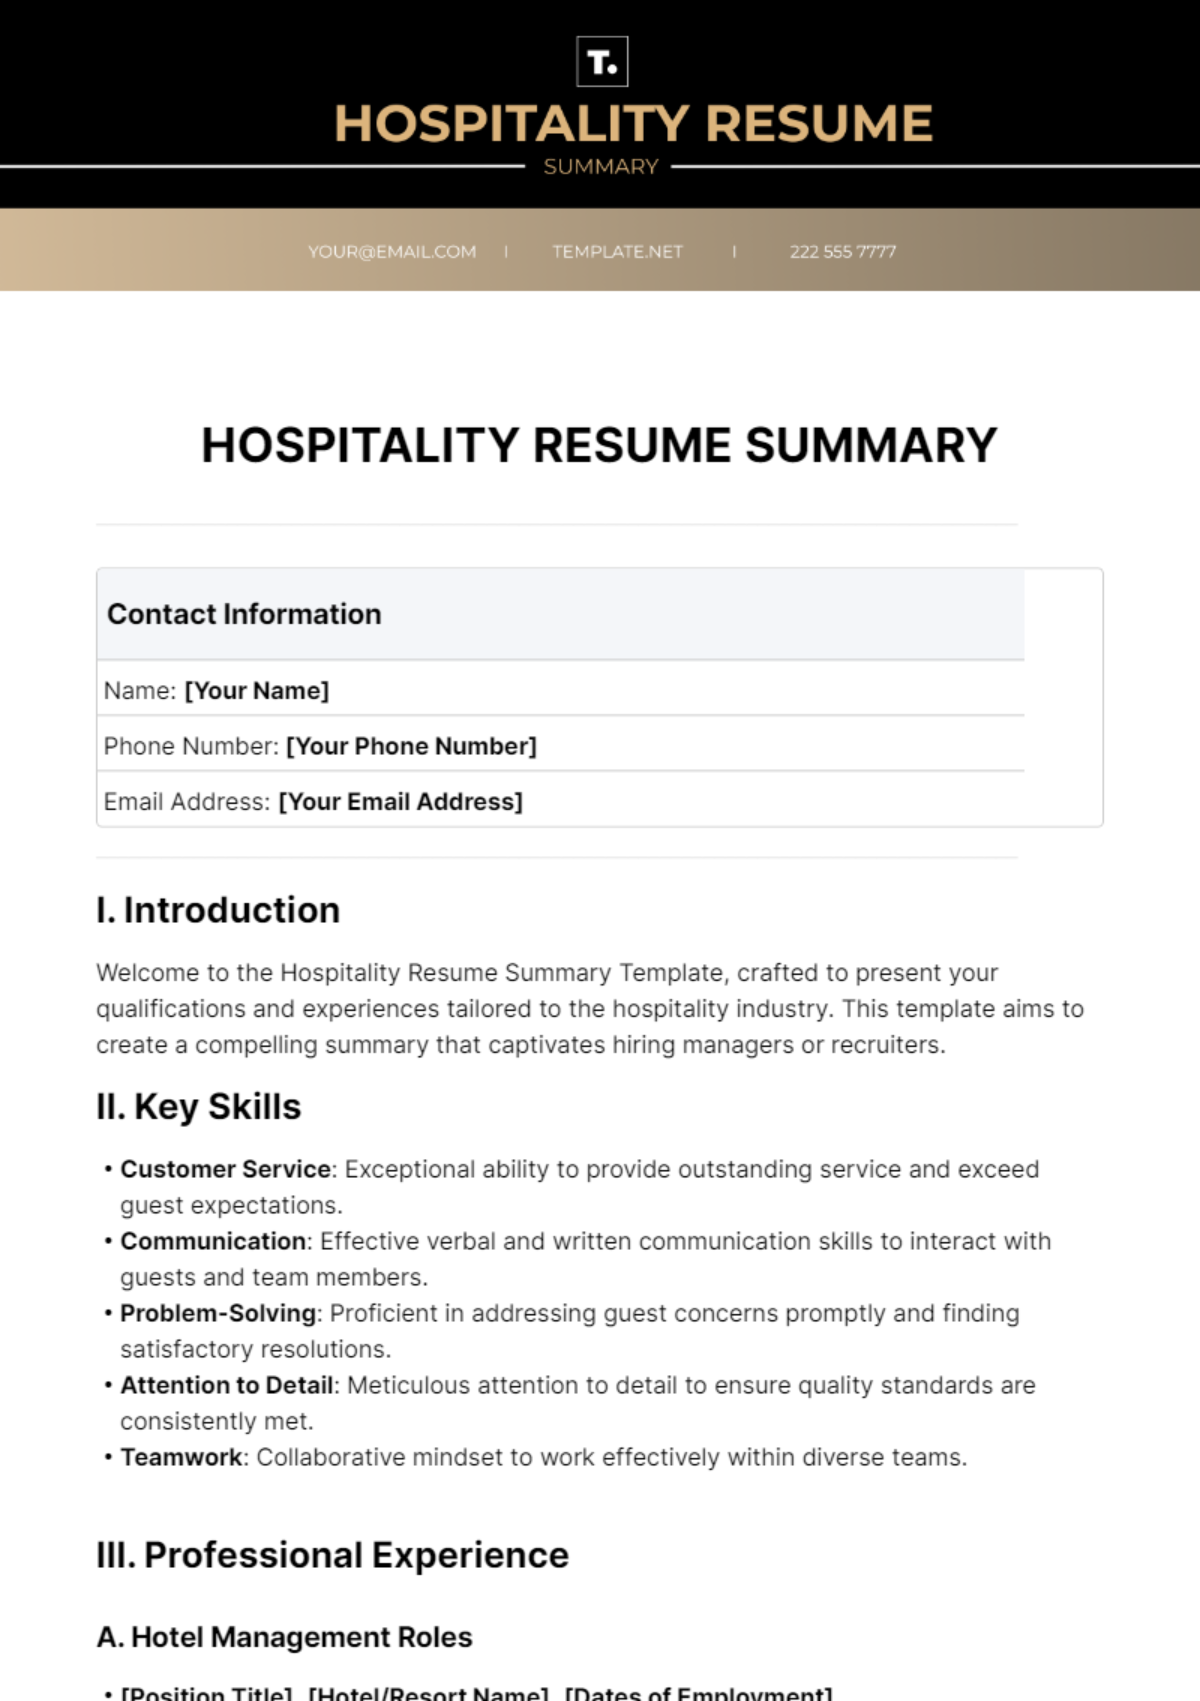 Hospitality Resume Summary Template